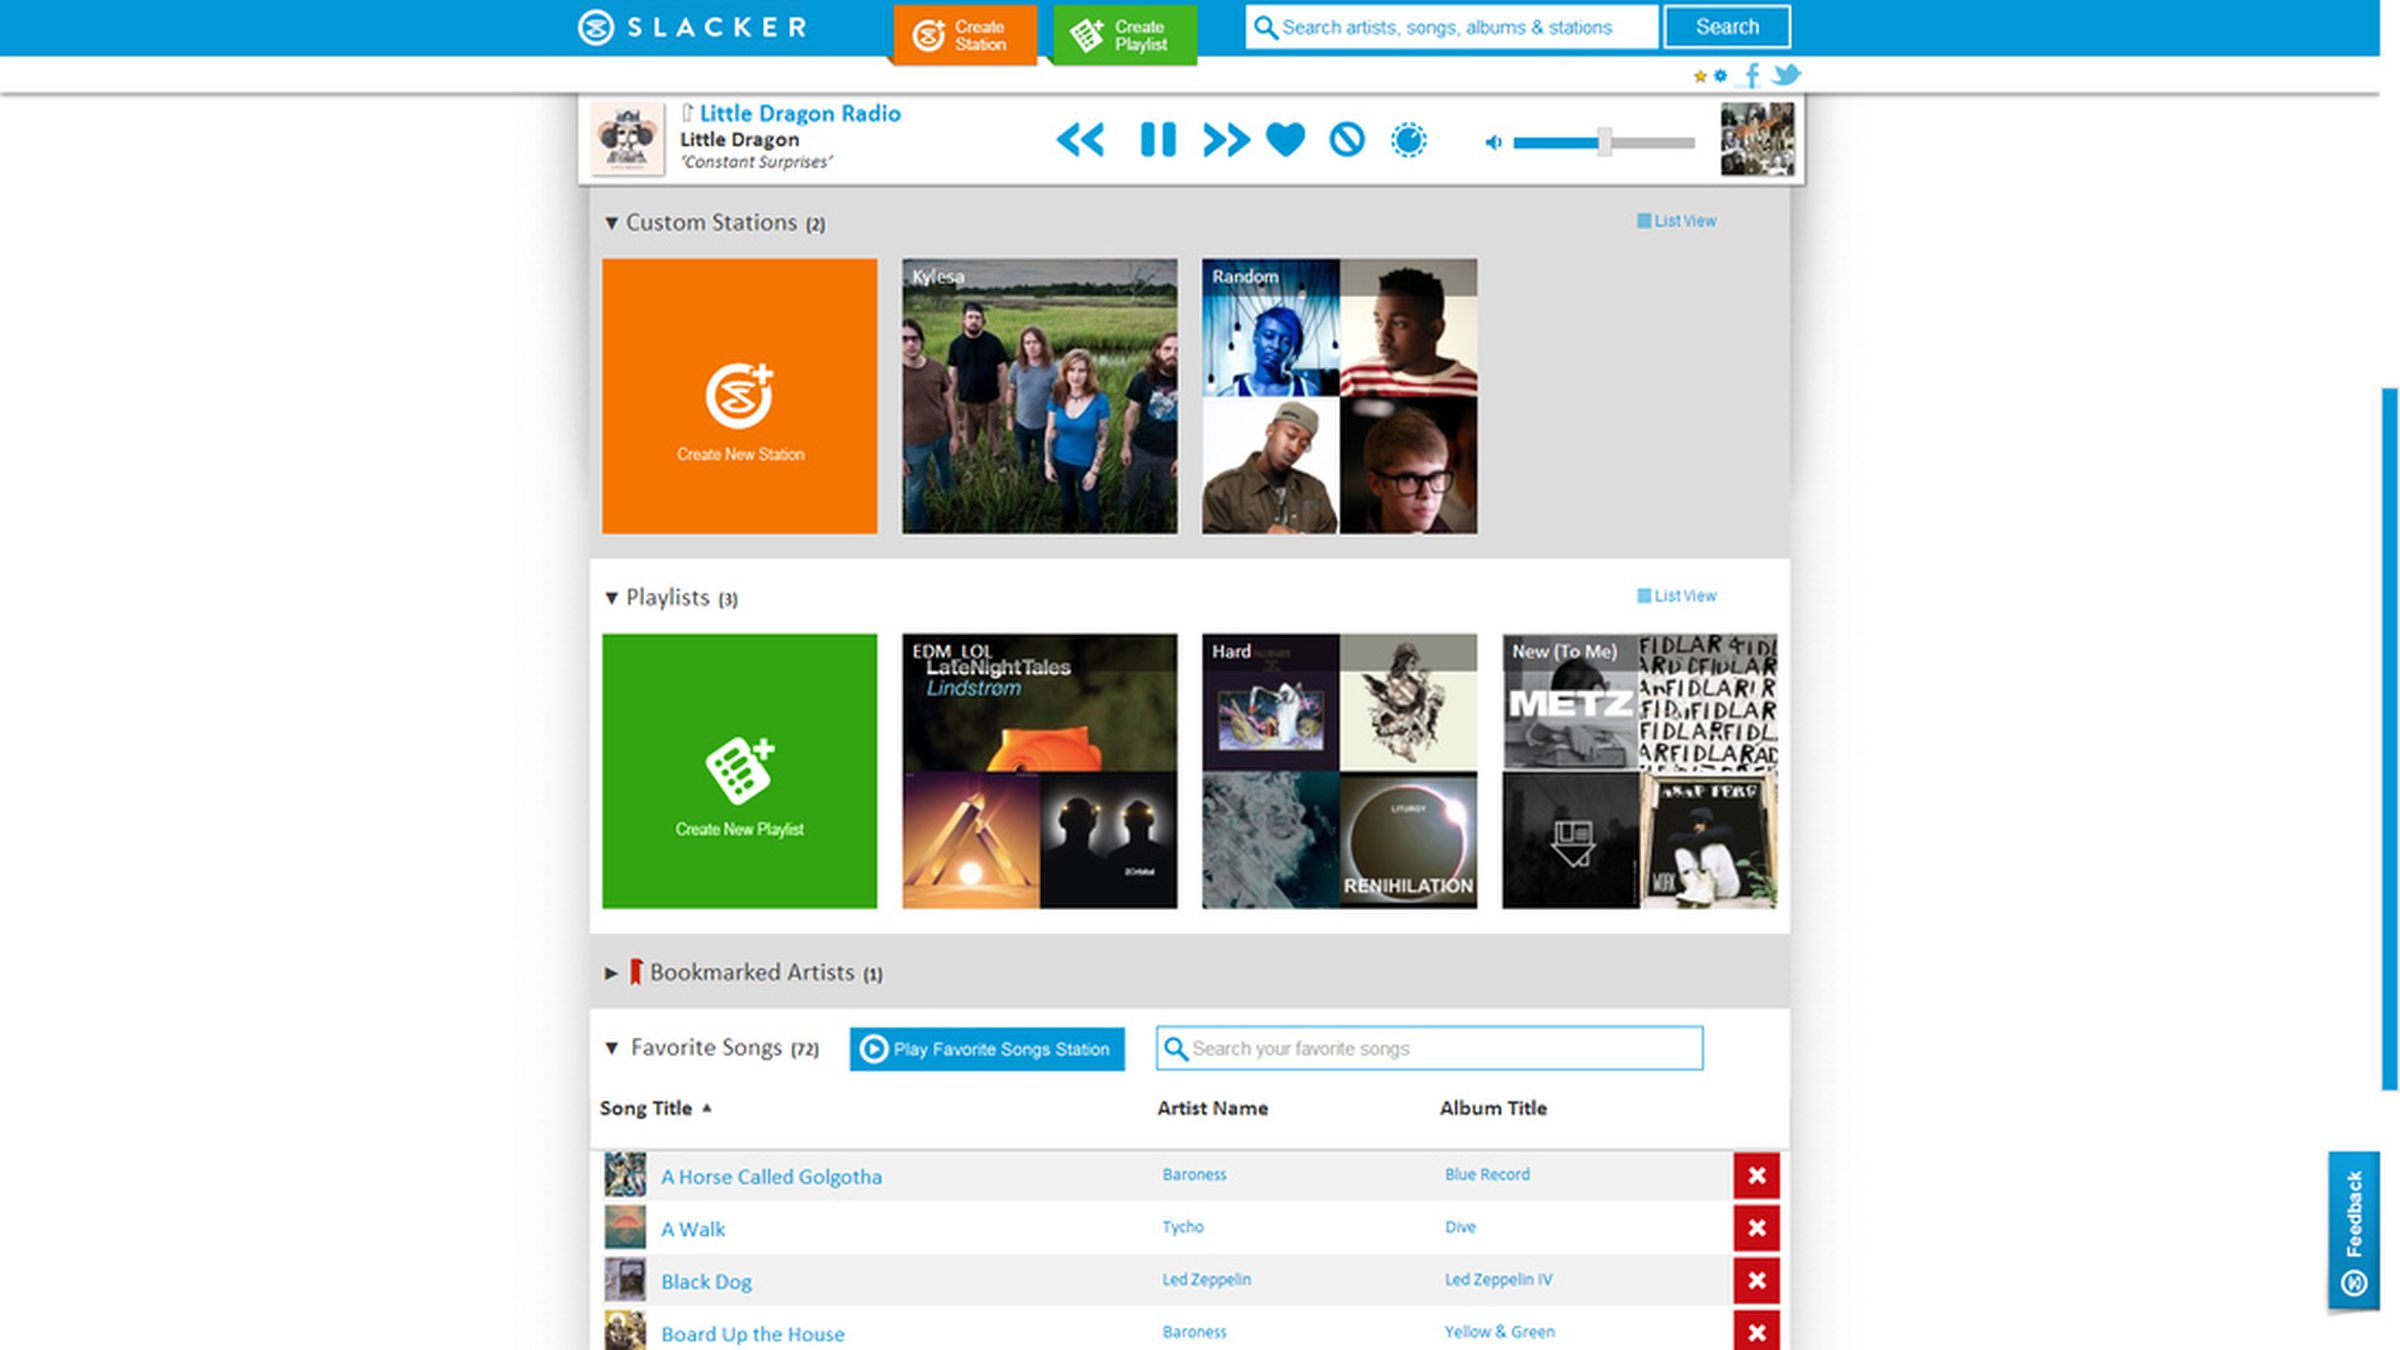 Slacker 2013 redesign screenshots